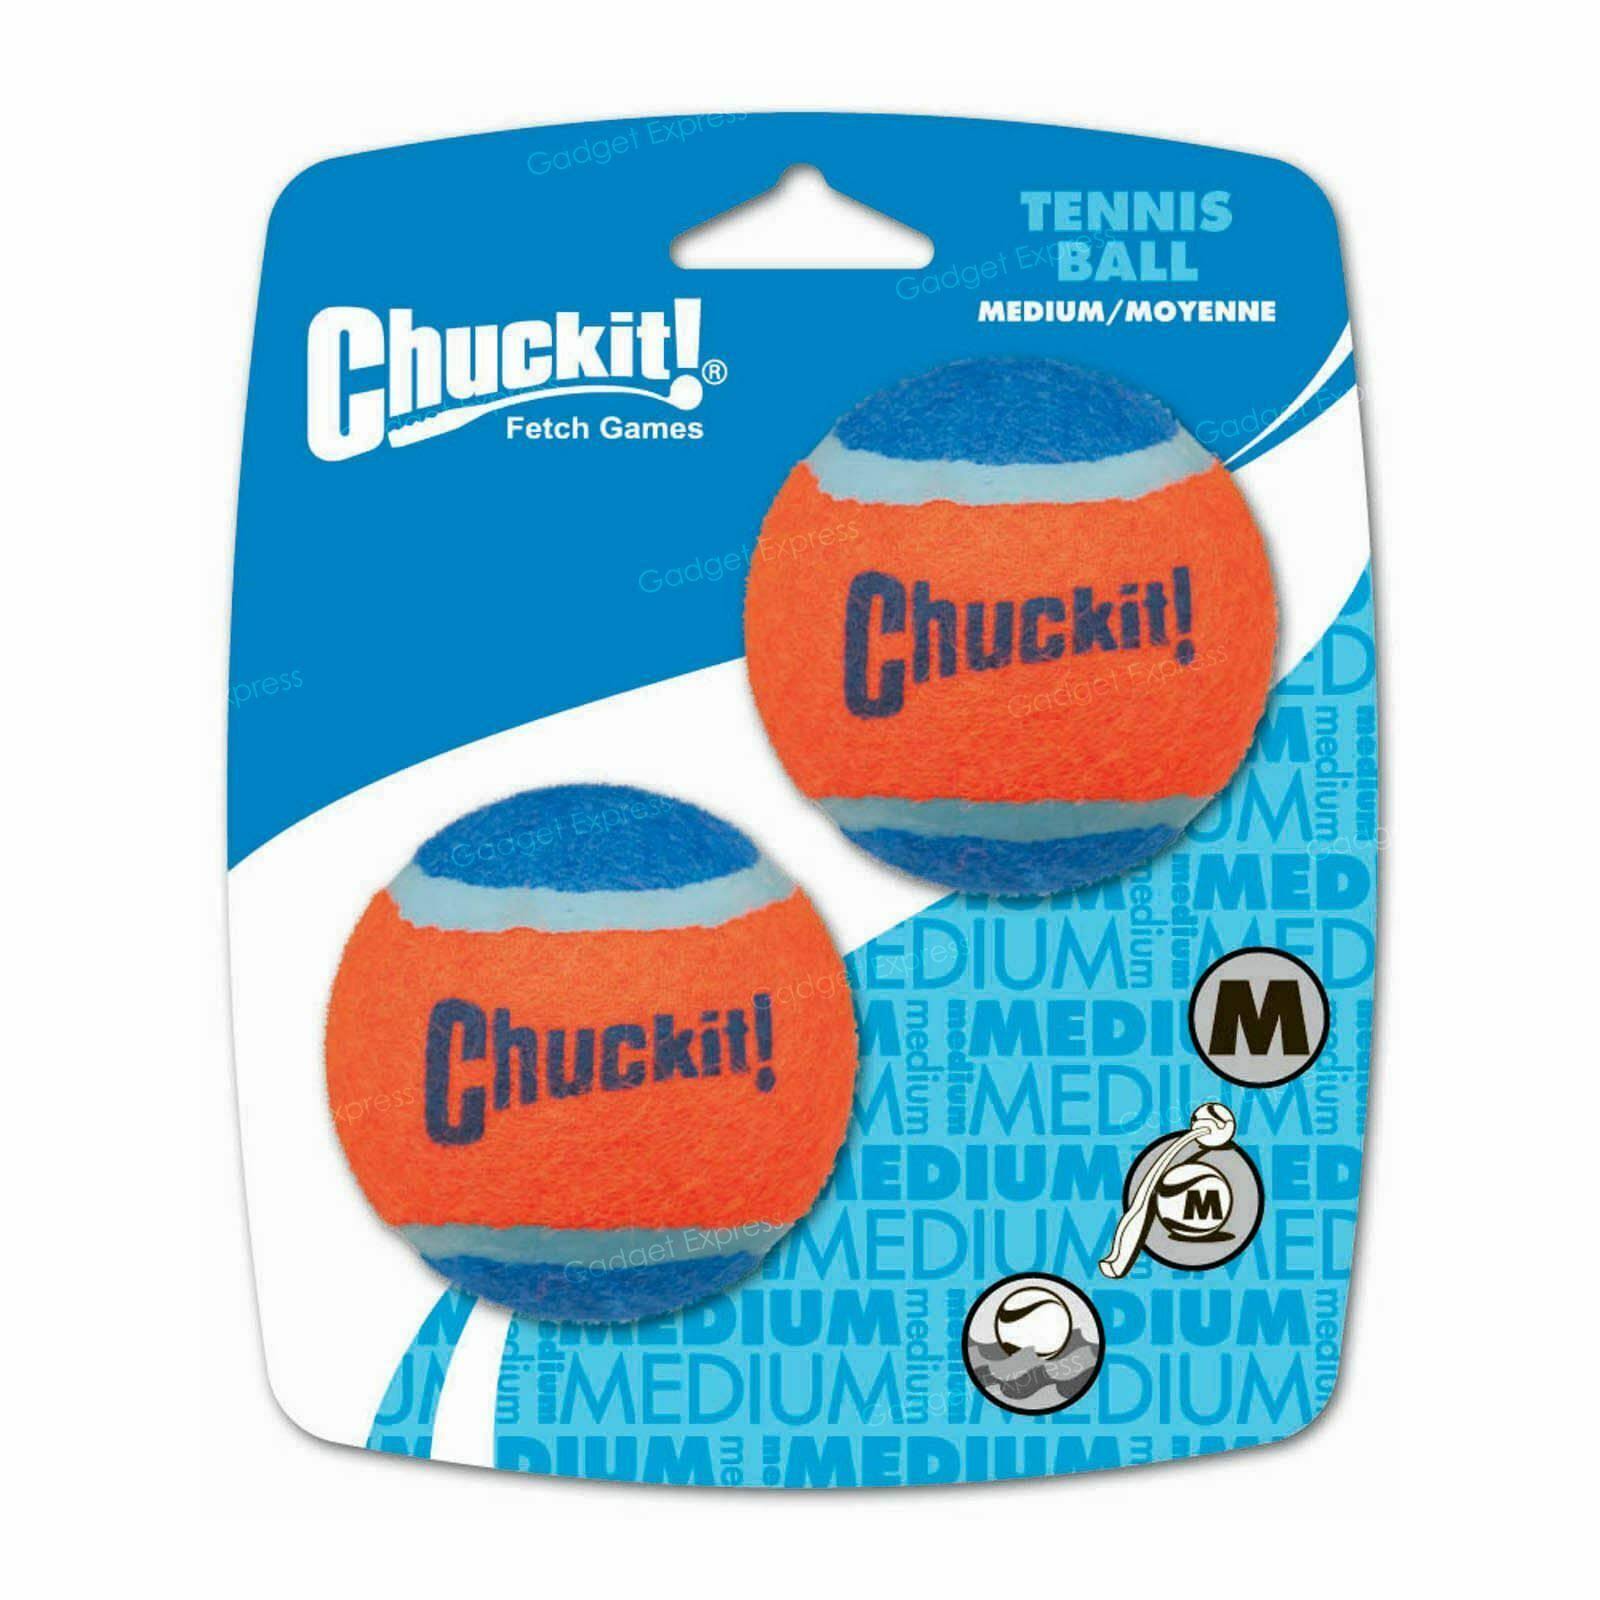 Chuckit Tennis Balls - Medium, x2